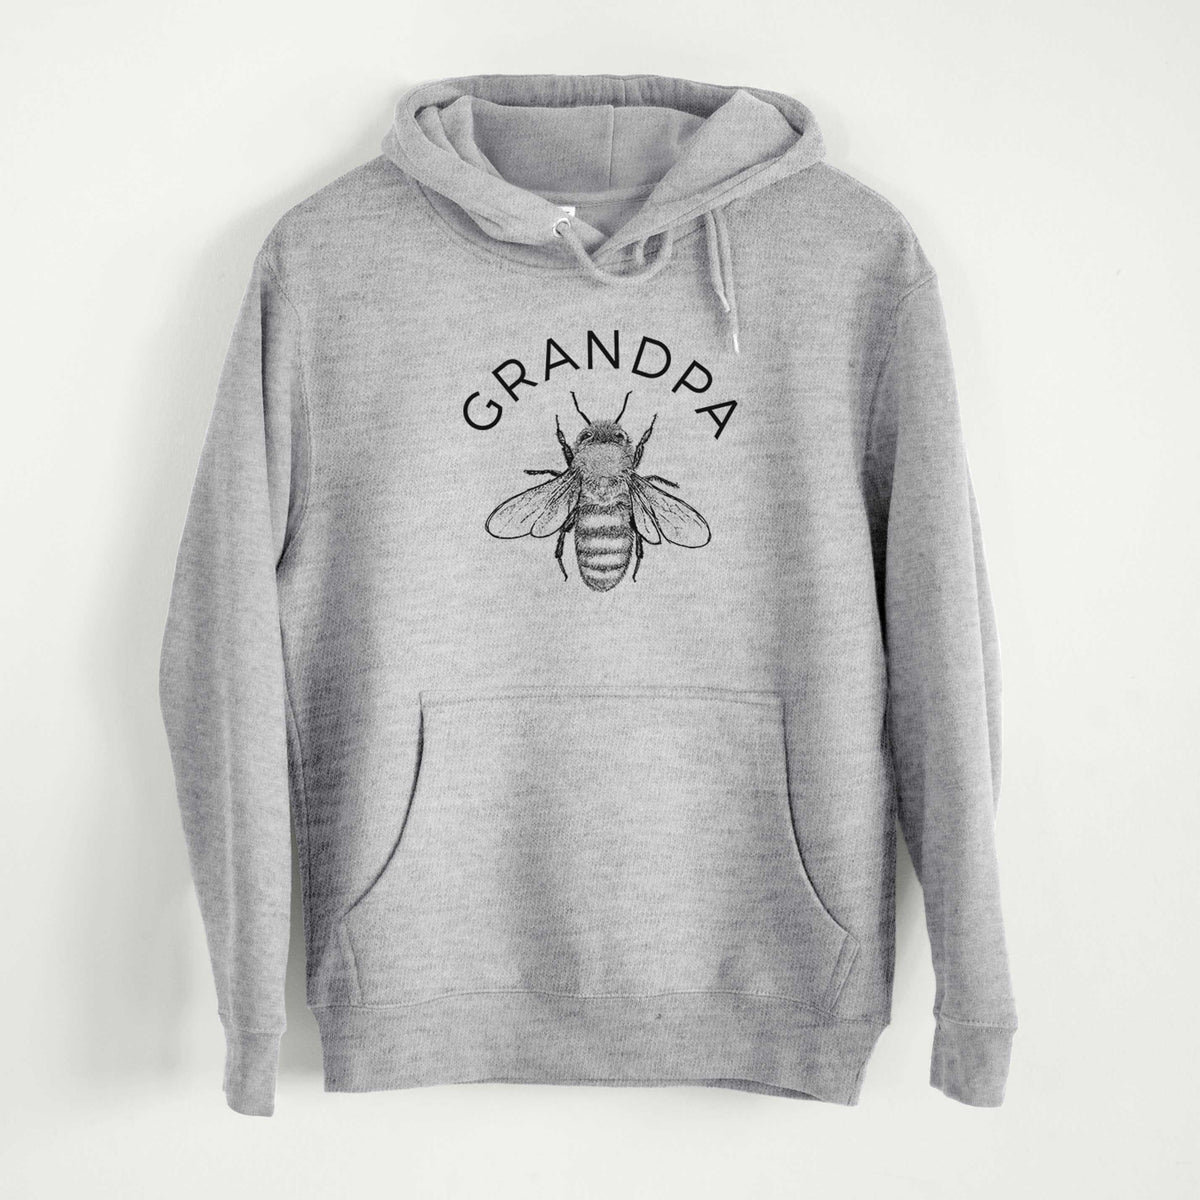 Grandpa Bee  - Mid-Weight Unisex Premium Blend Hoodie